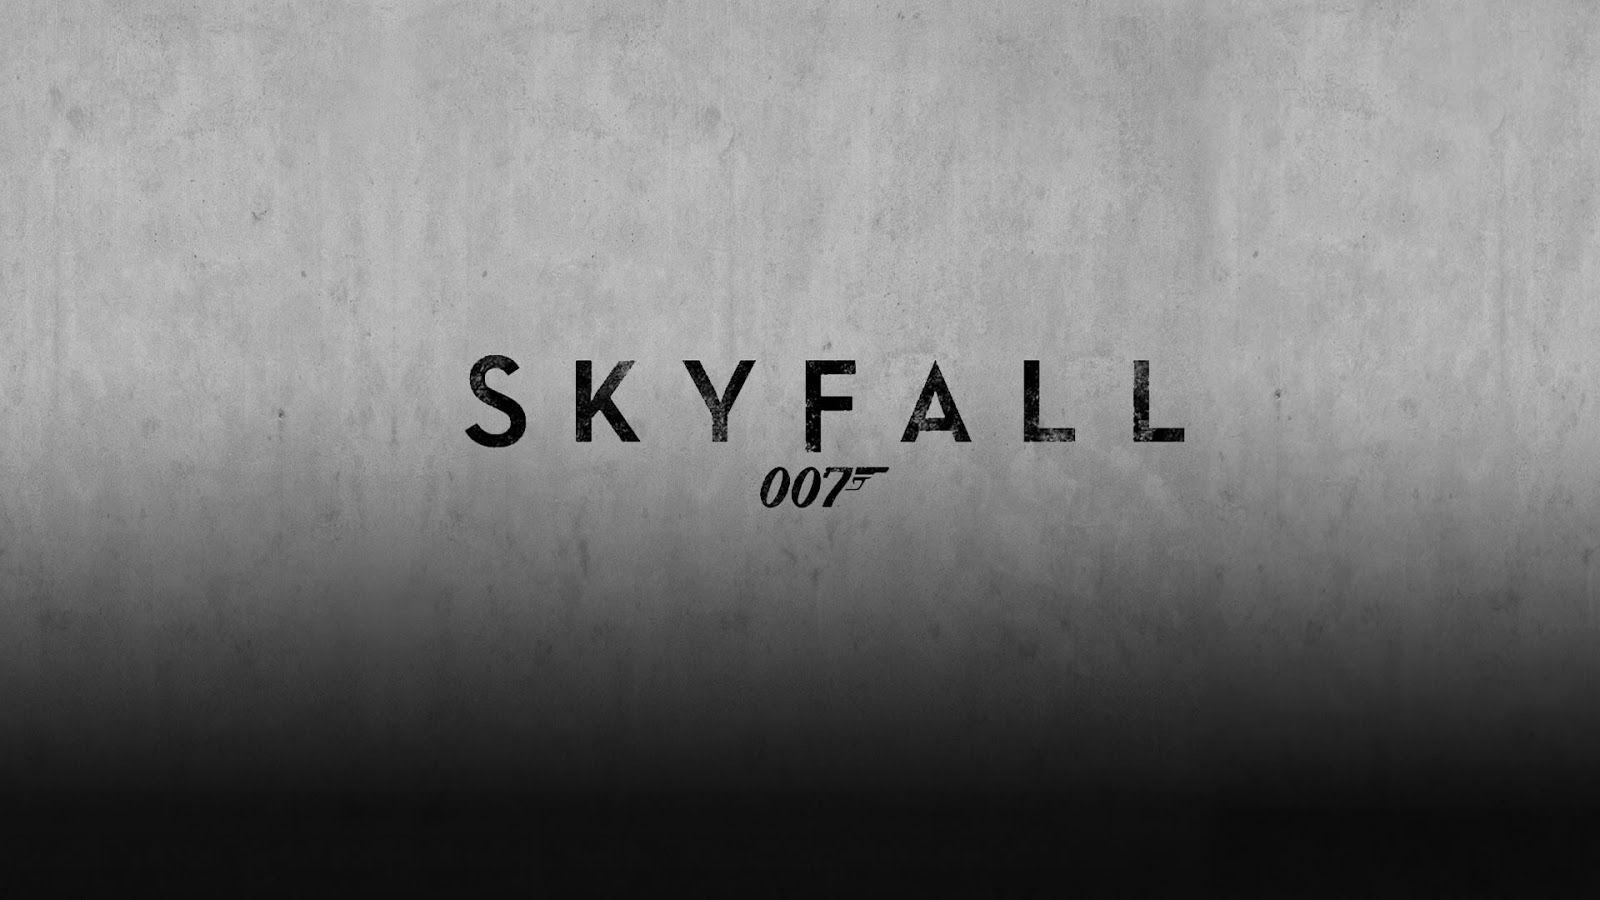 James Bond 007 Wallpapers Skyfall Wallpaper Cave